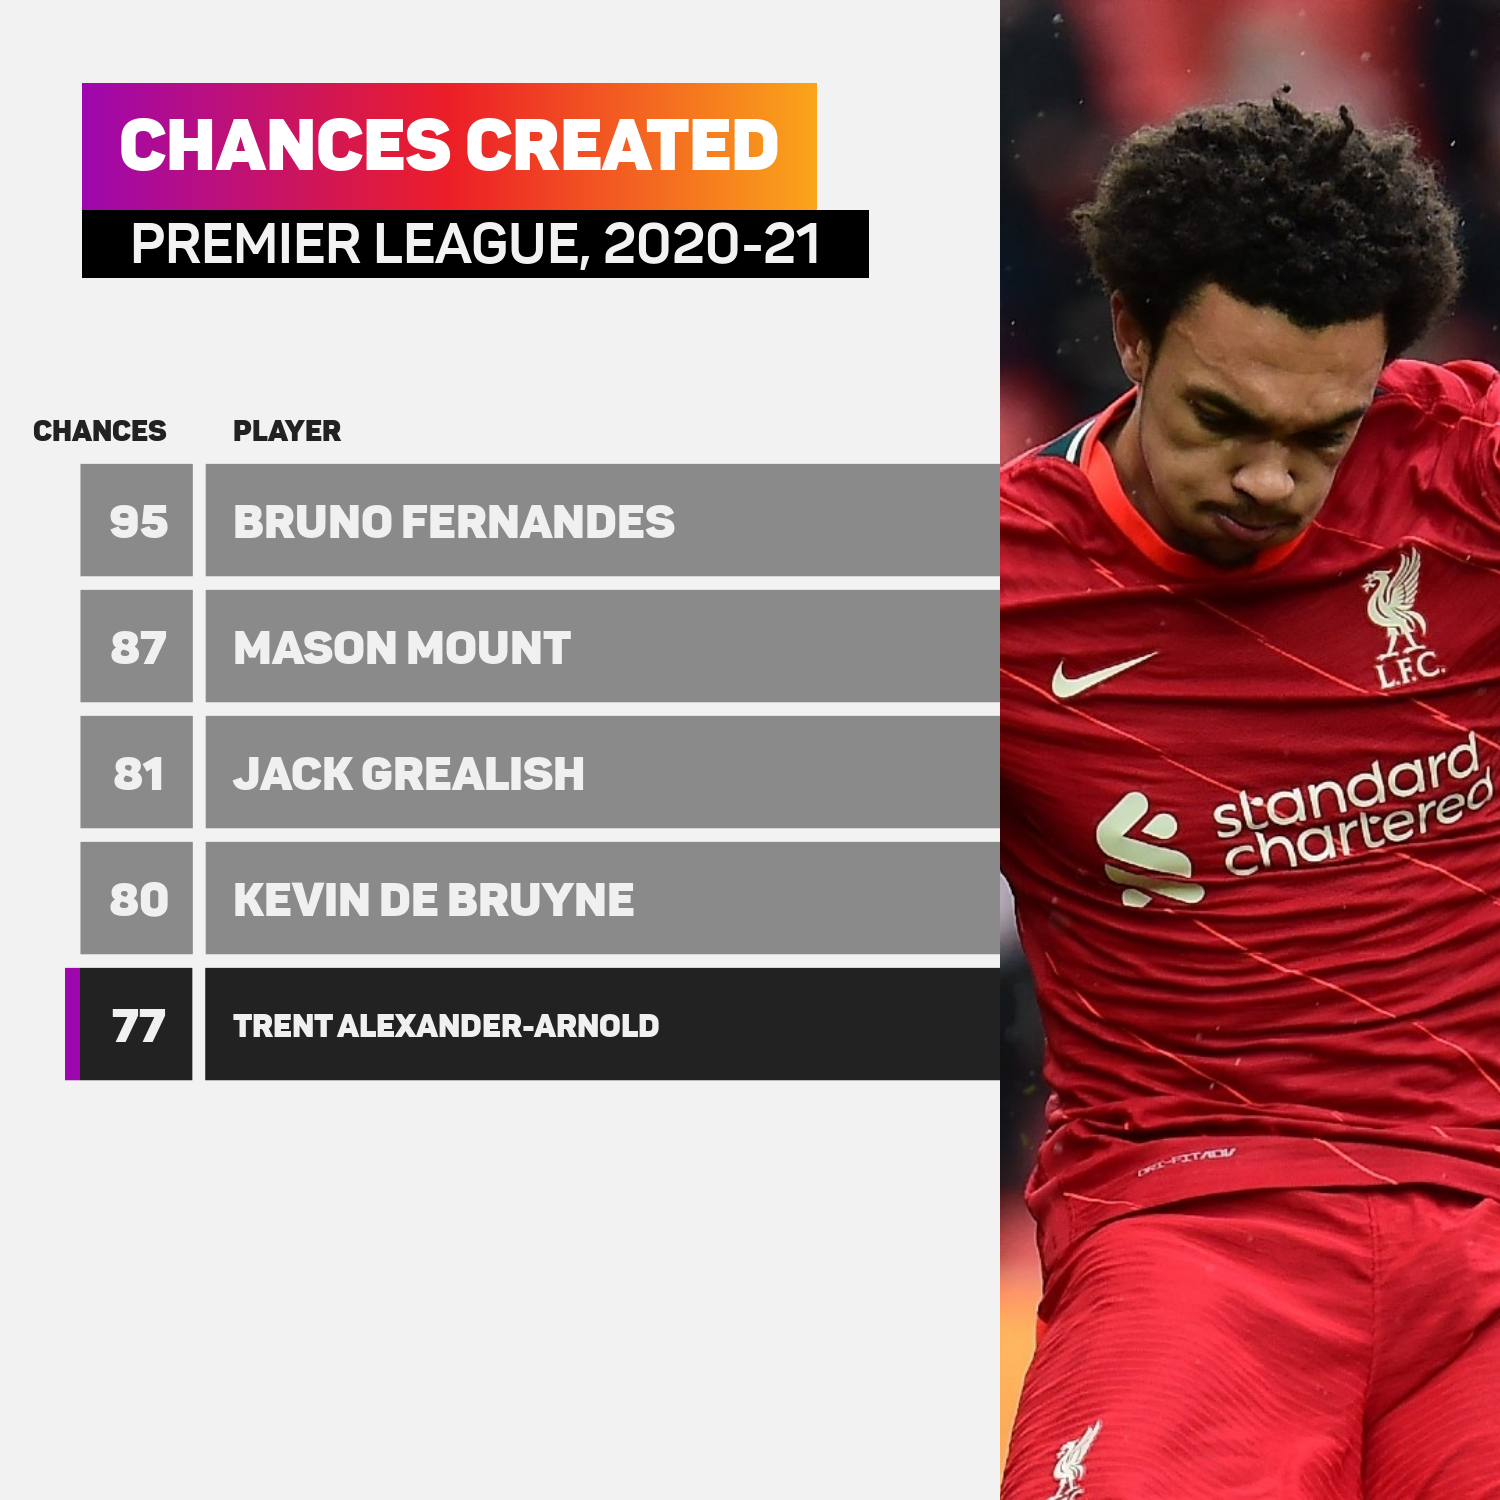 Chances created in Premier League